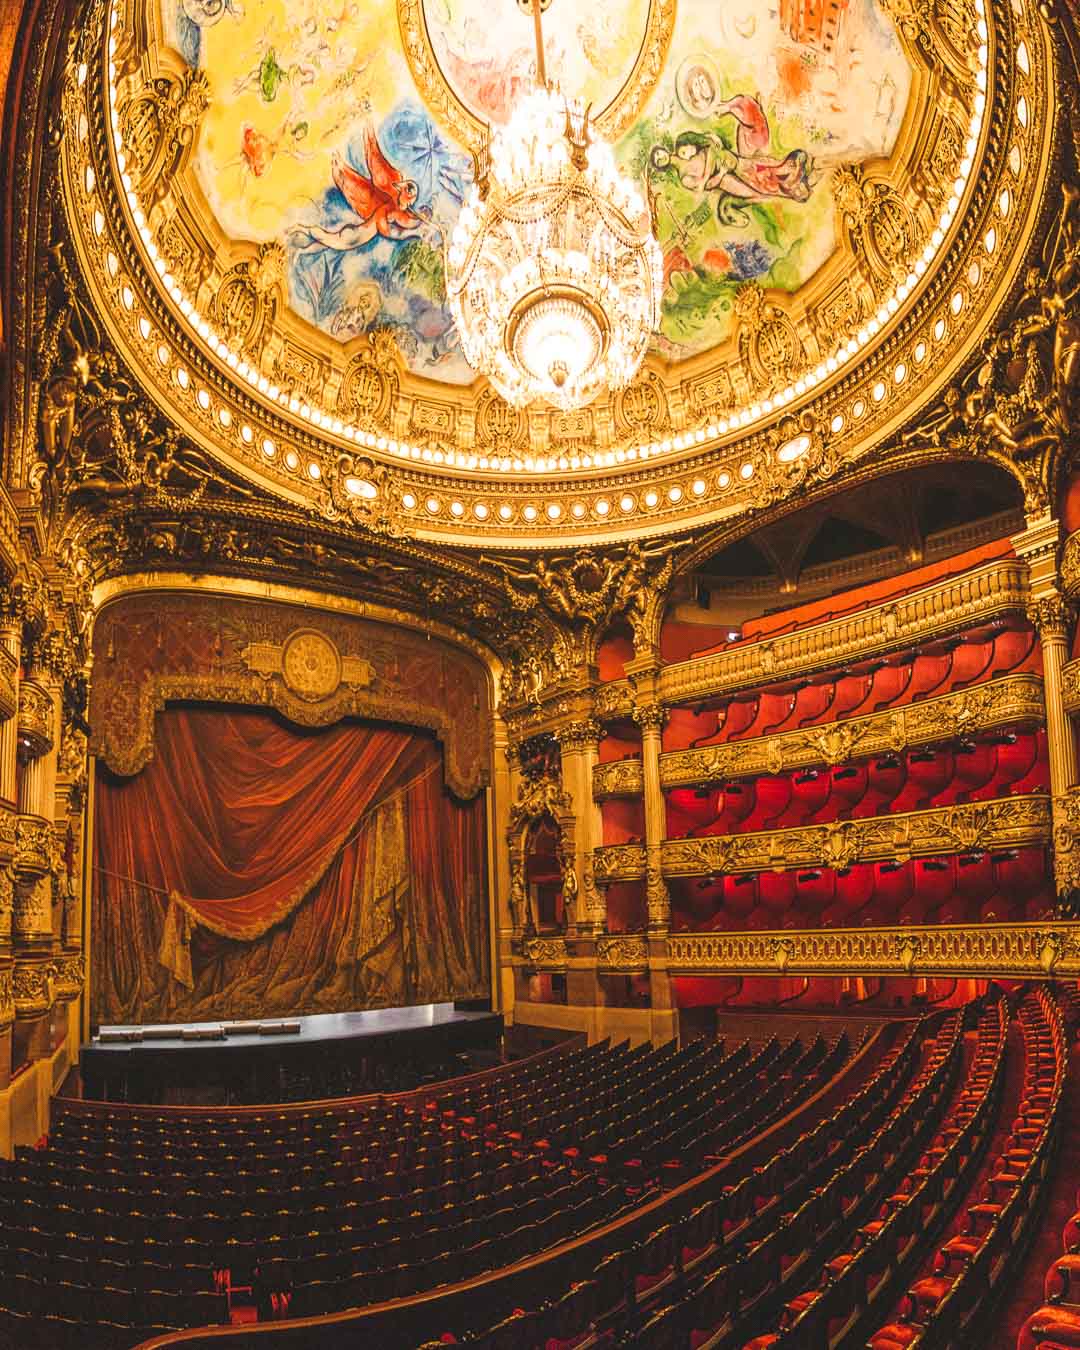 opera garnier is one of paris iconic buildings